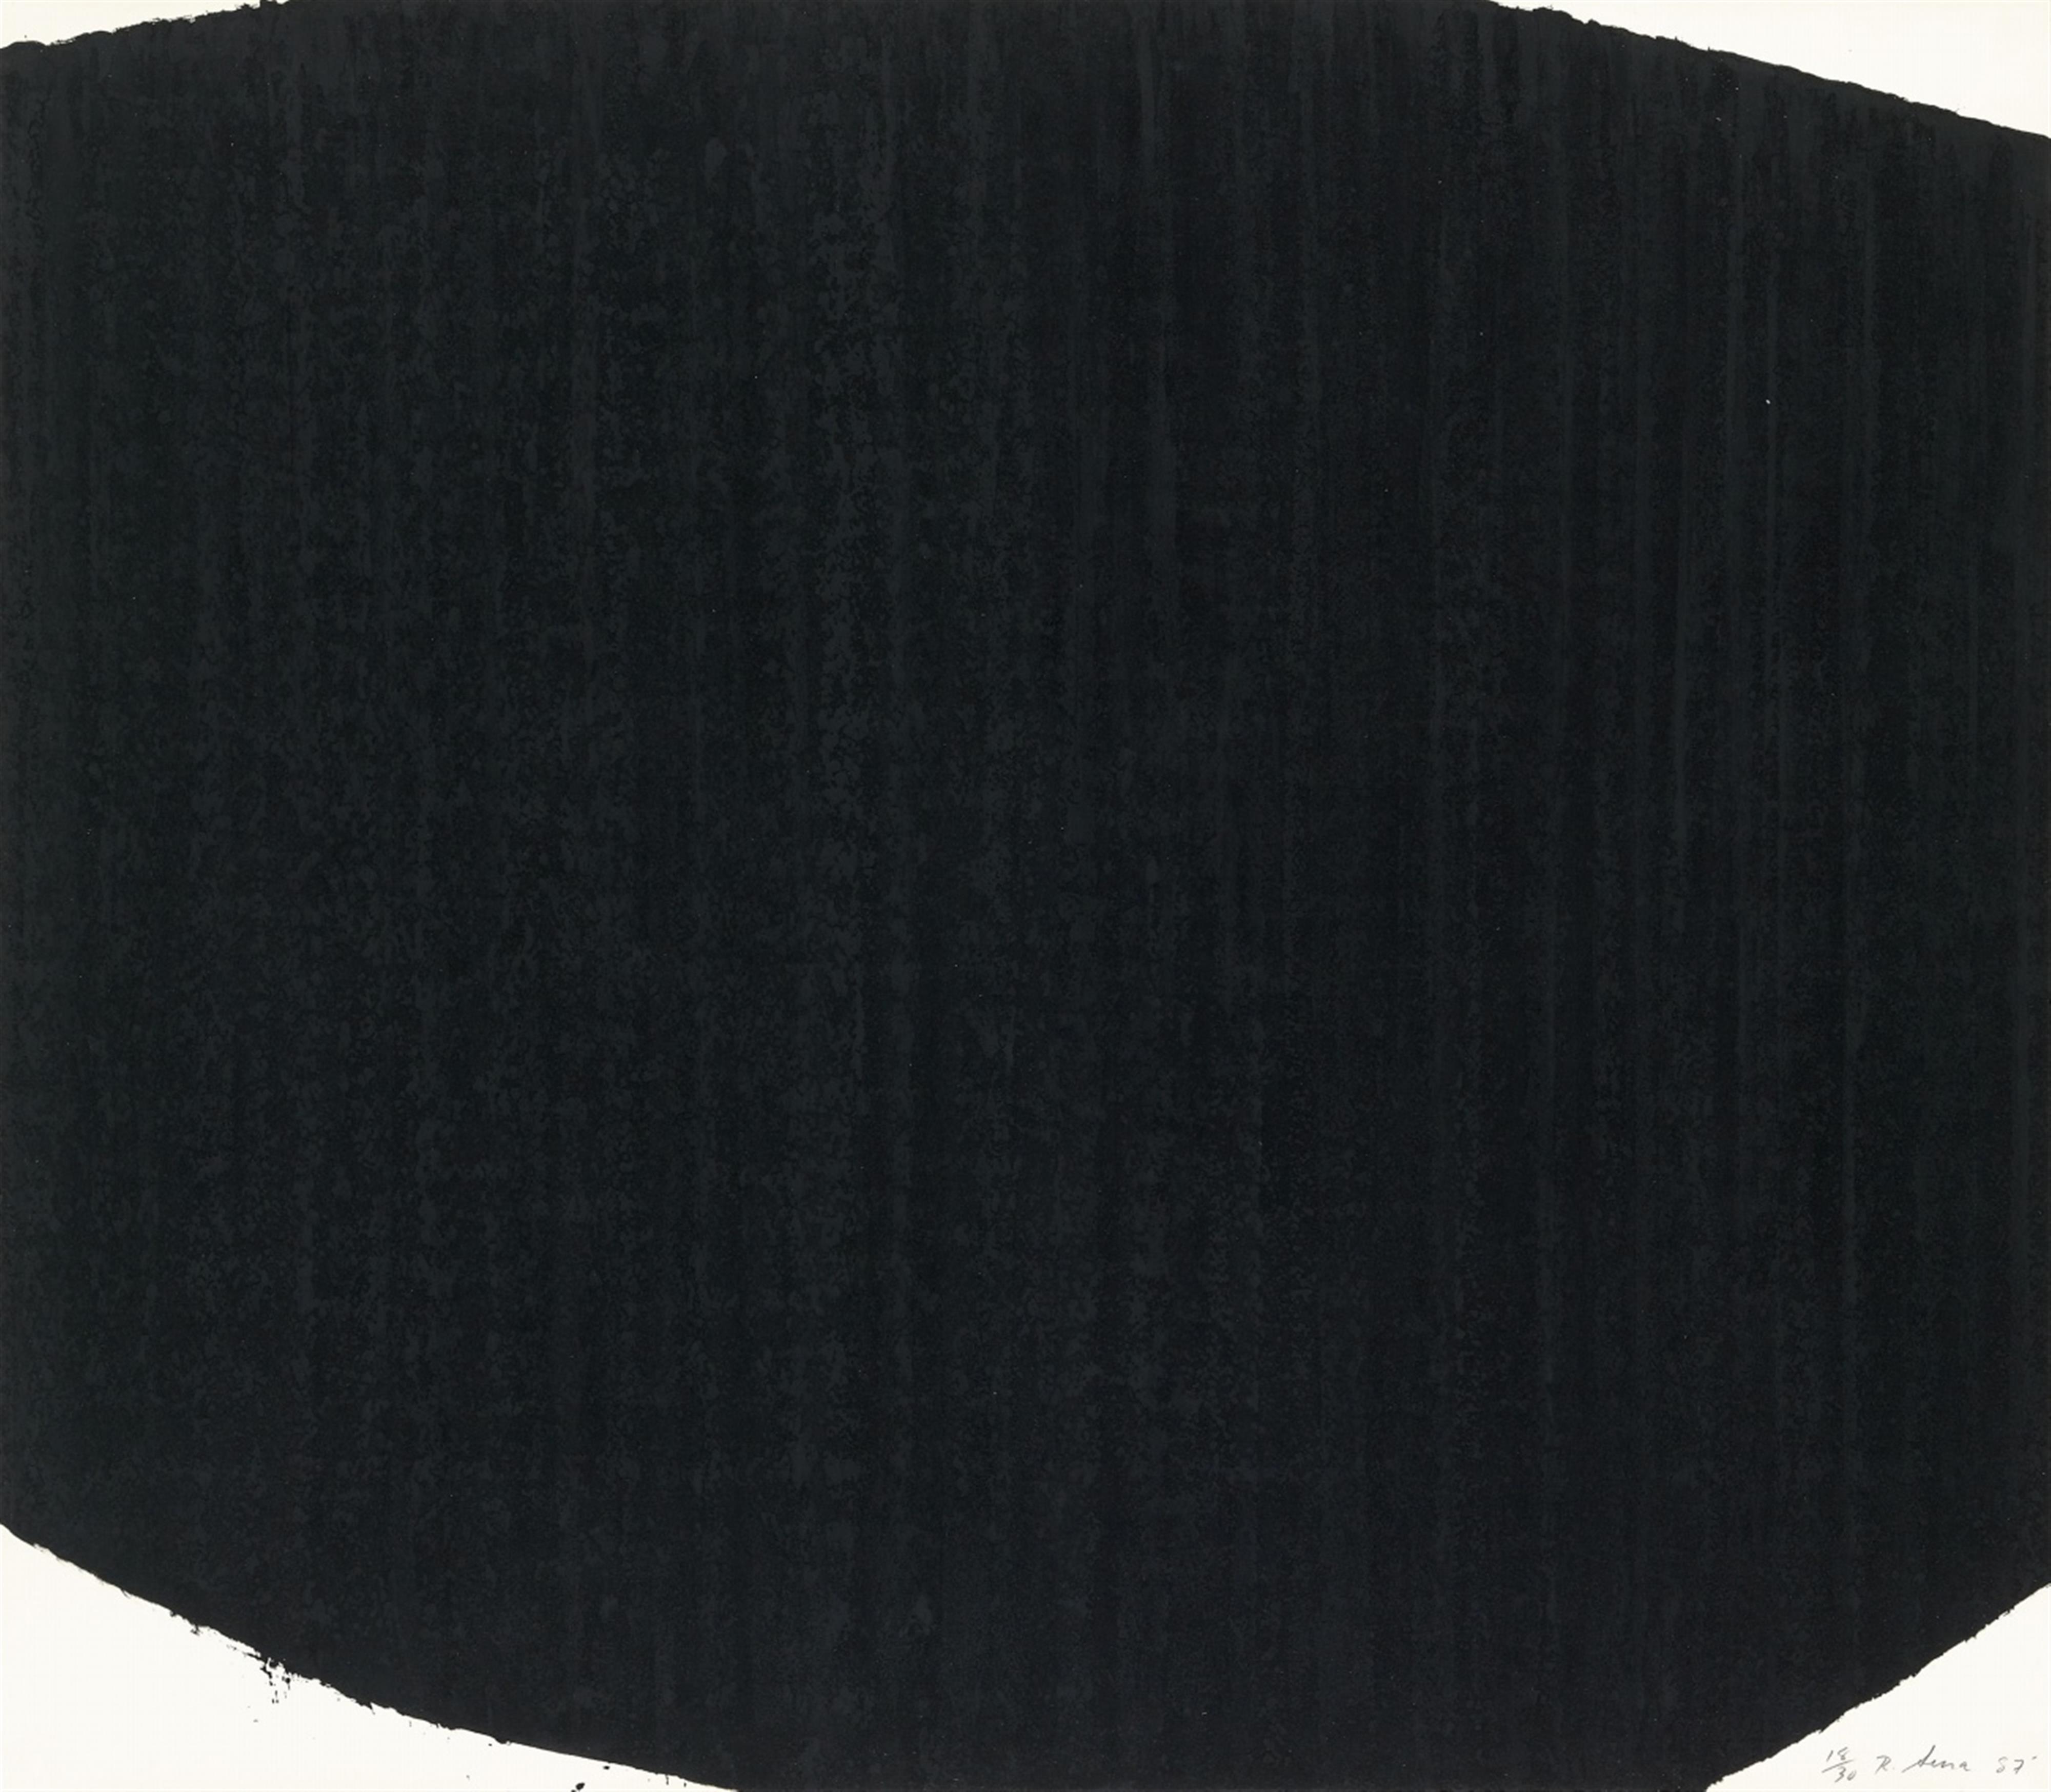 Richard Serra - Core - image-1